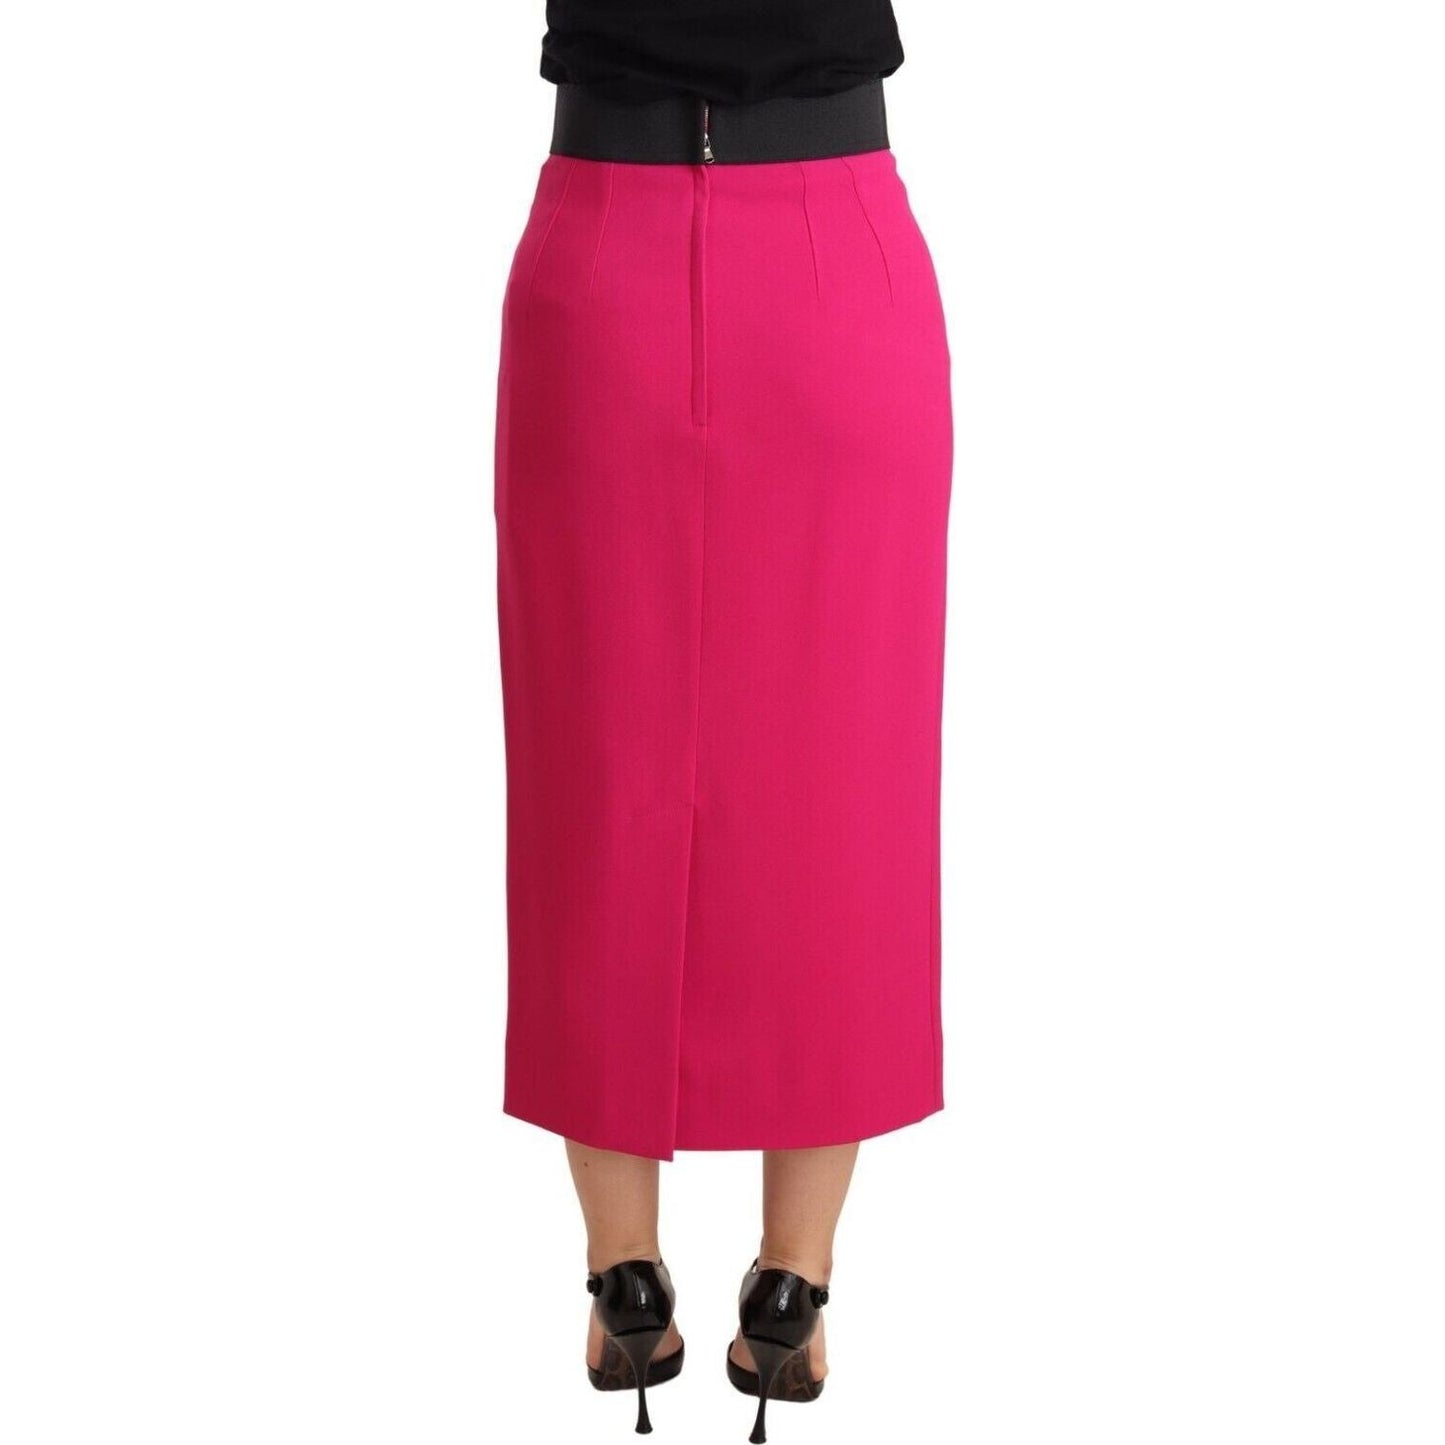 Dolce & Gabbana Elegant High-Waisted Pencil Skirt in Pink Skirt pink-high-waist-stretch-pencil-straight-skirt